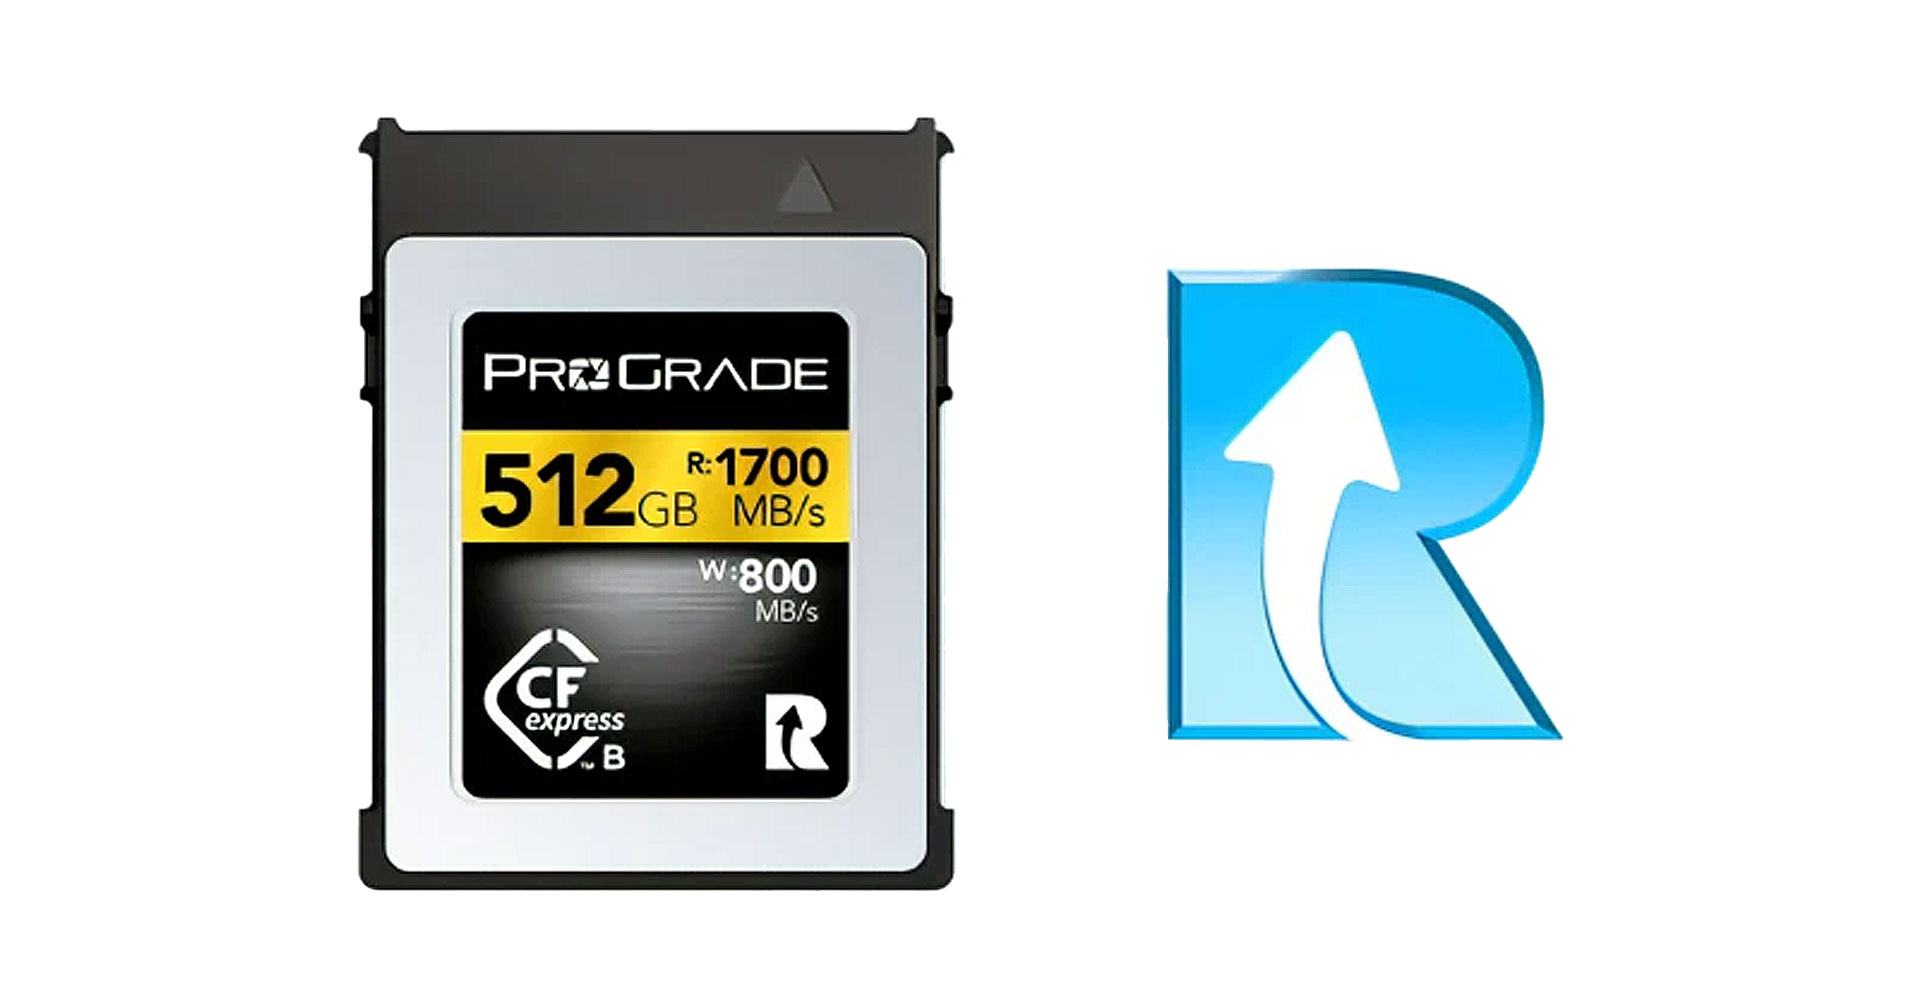 ProGrade Digital ออกซอฟต์แวร์ตัวล่าสุด สำหรับอัปเดต Firmware ให้กับ Memory Card